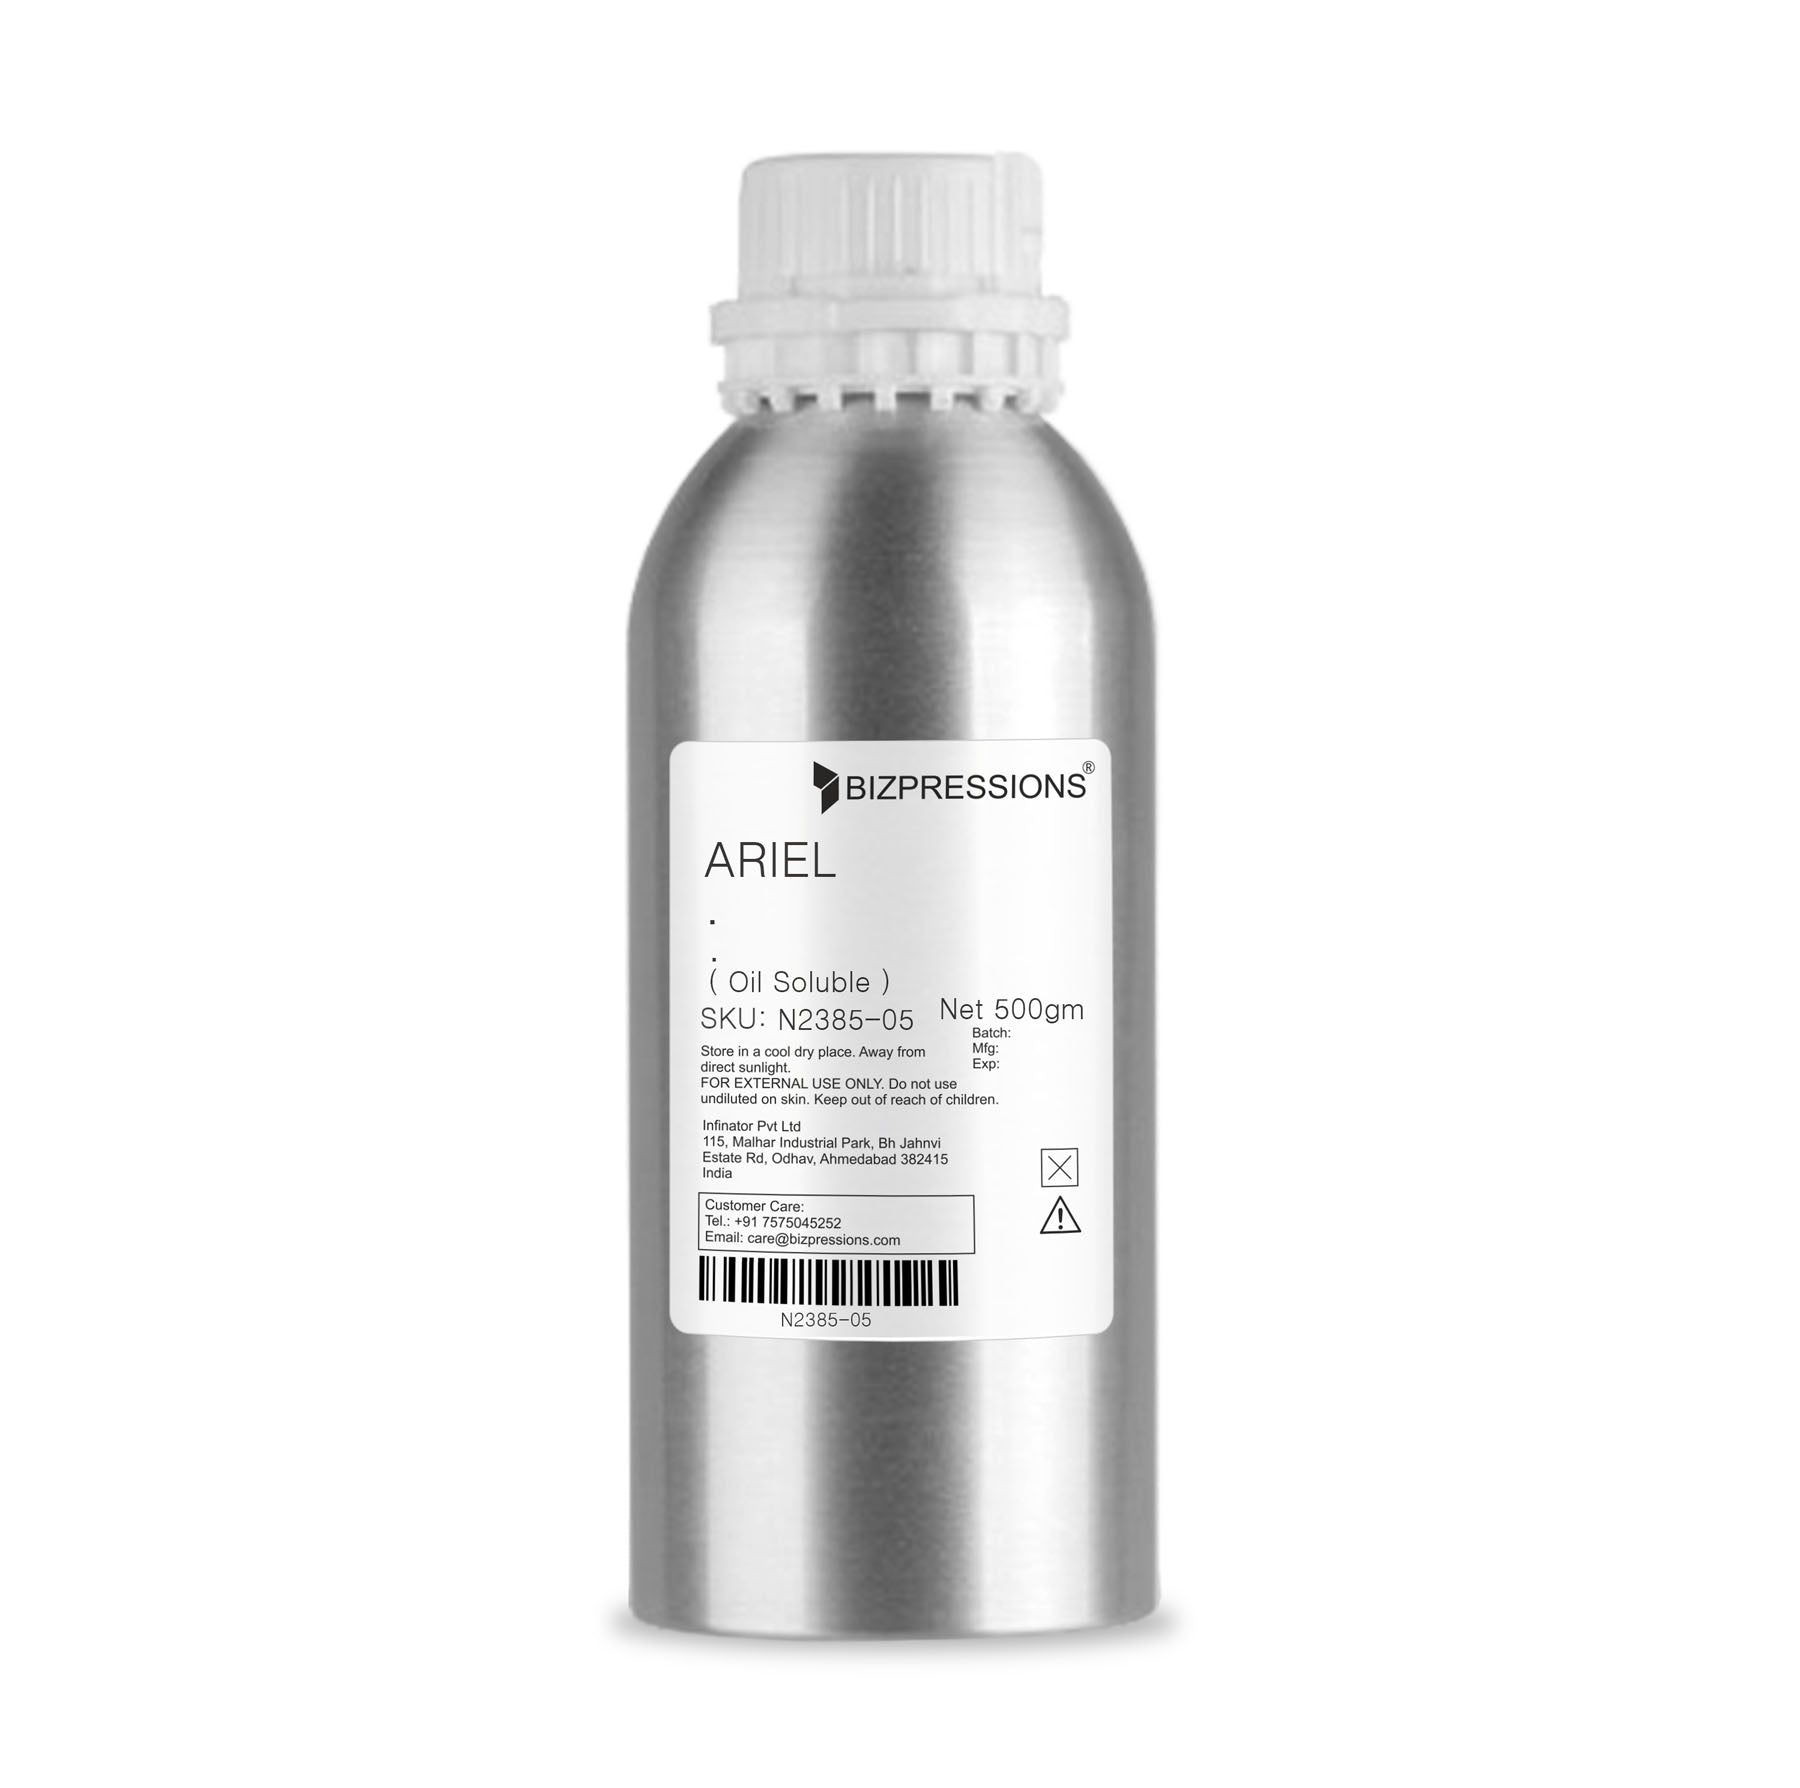 ARIEL - Fragrance ( Oil Soluble ) - 500 gm